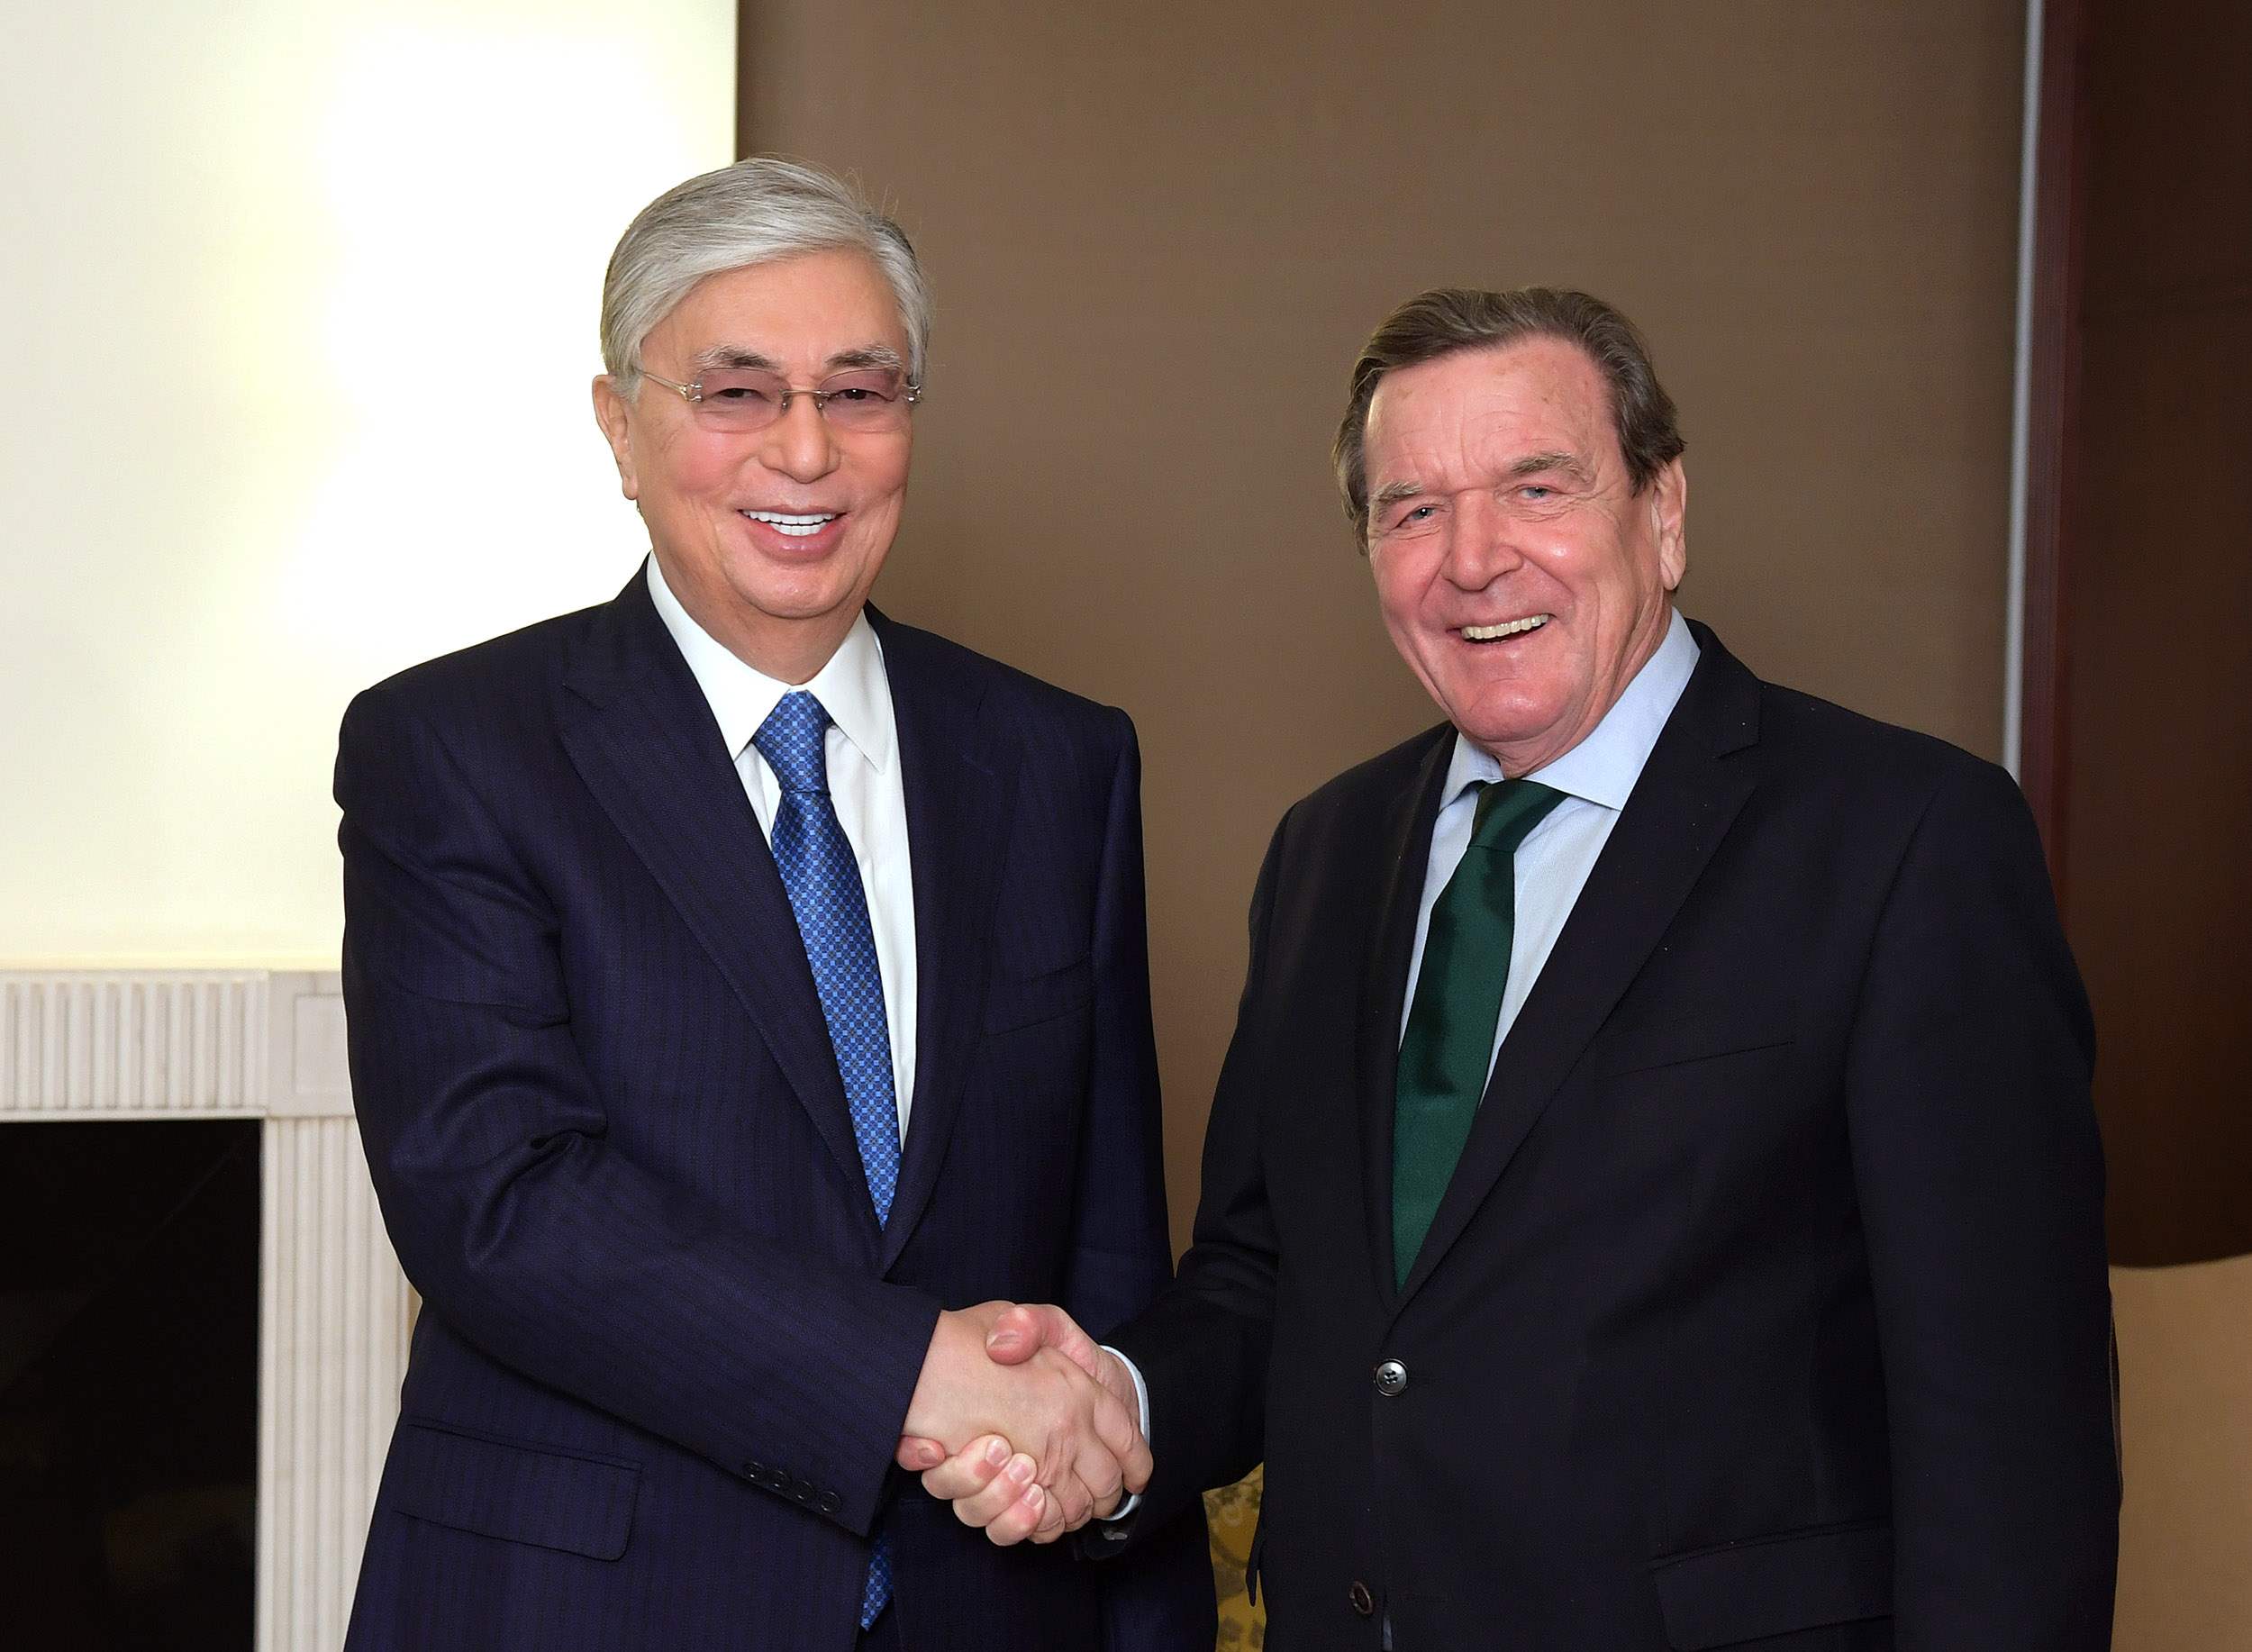 Head of State meets with former German Chancellor Gerhard Schröder